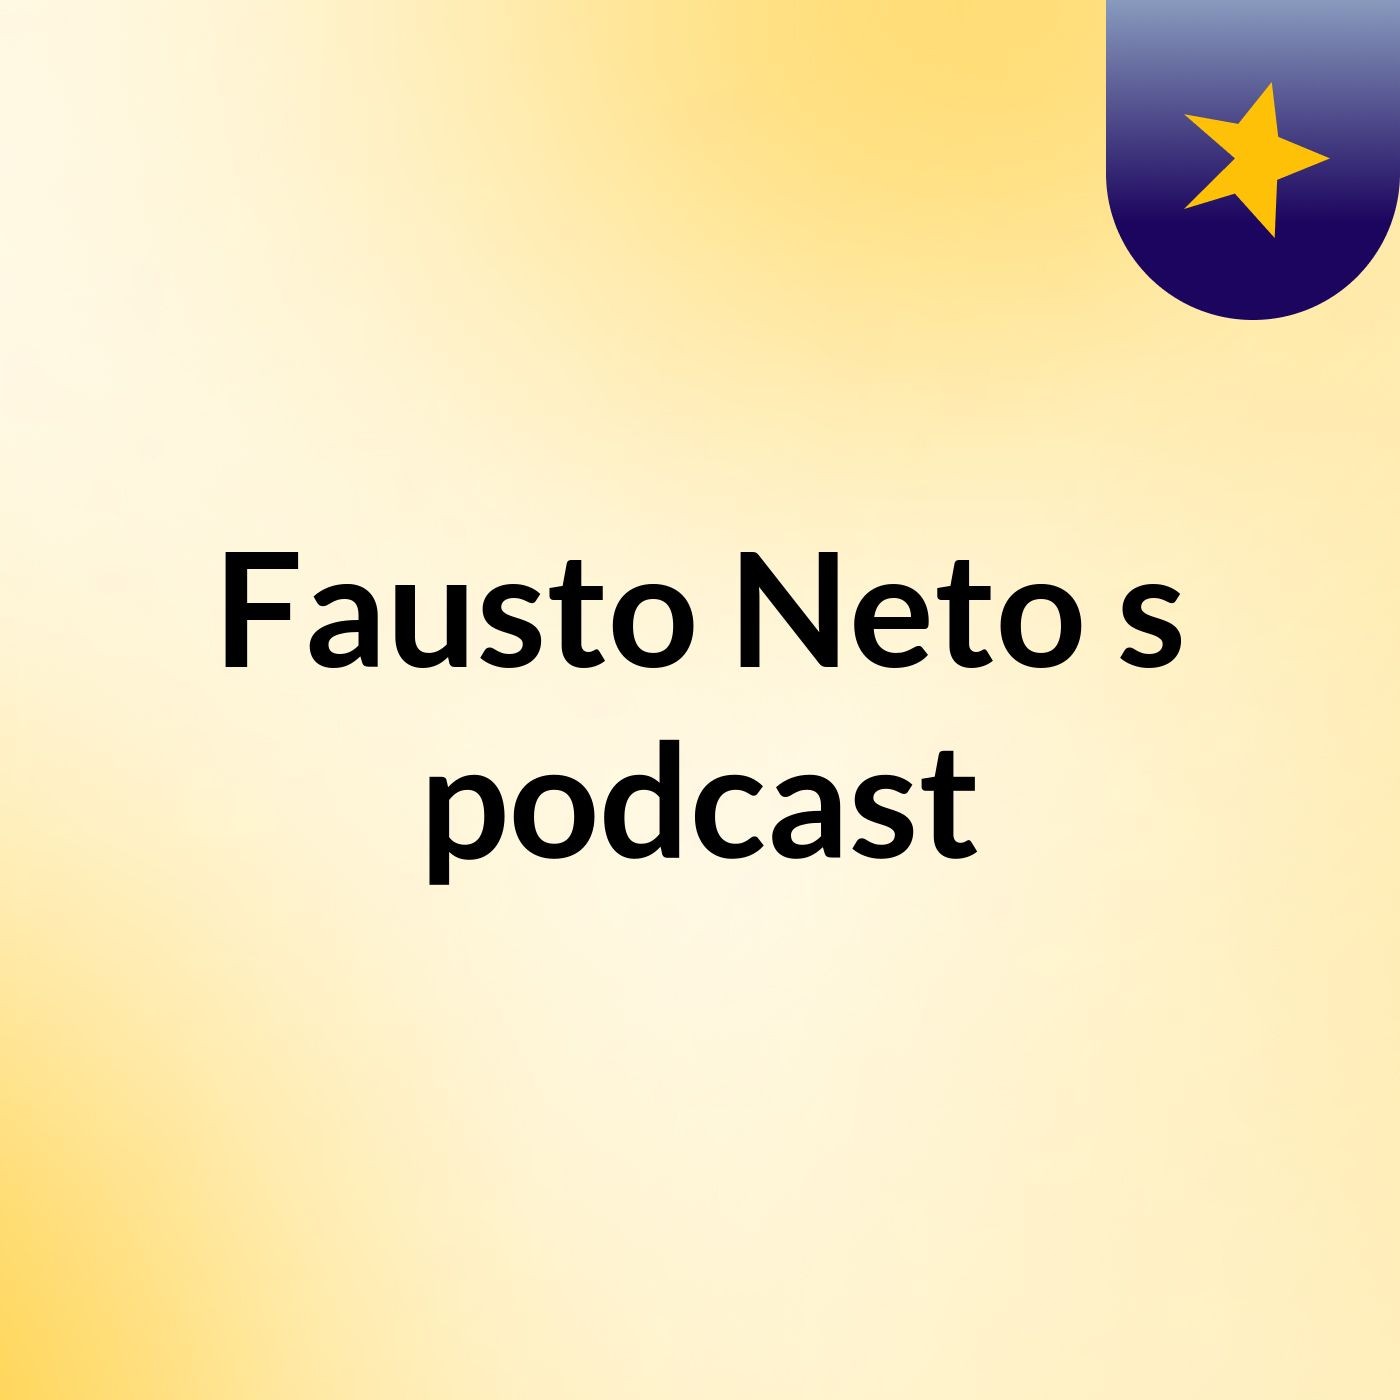 Fausto Neto's podcast